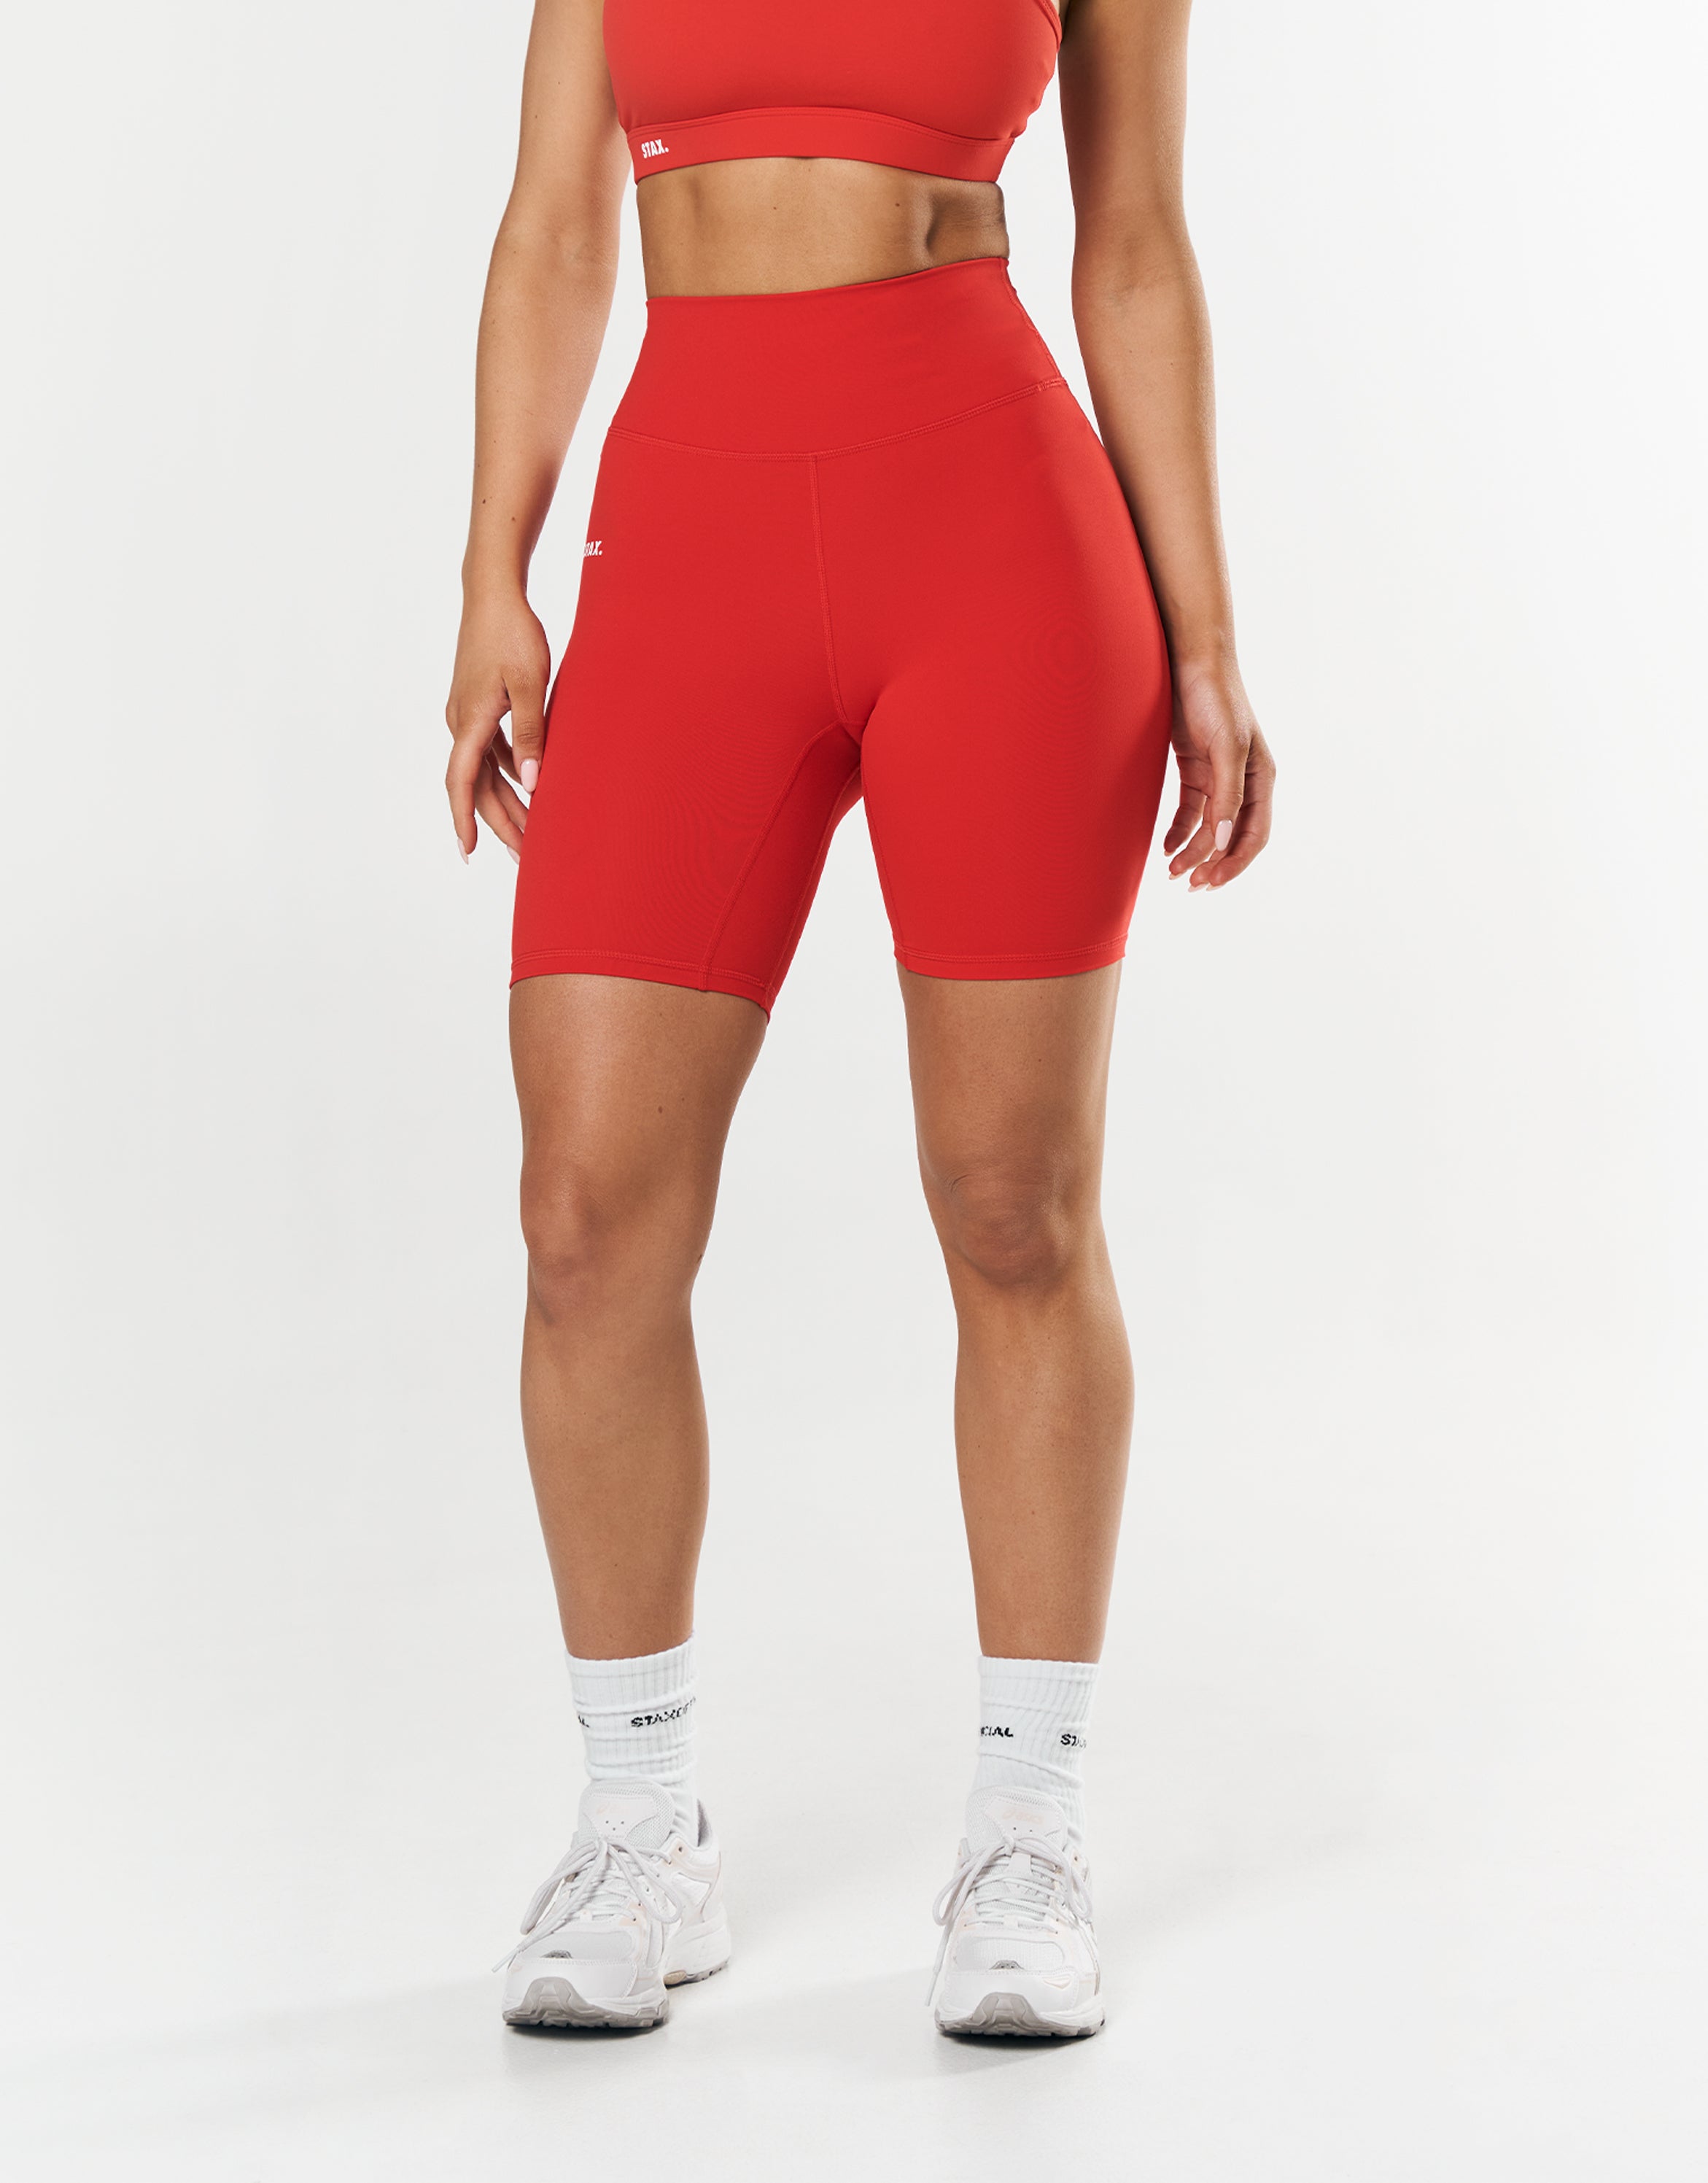 stax-original-bike-shorts-nandex-red